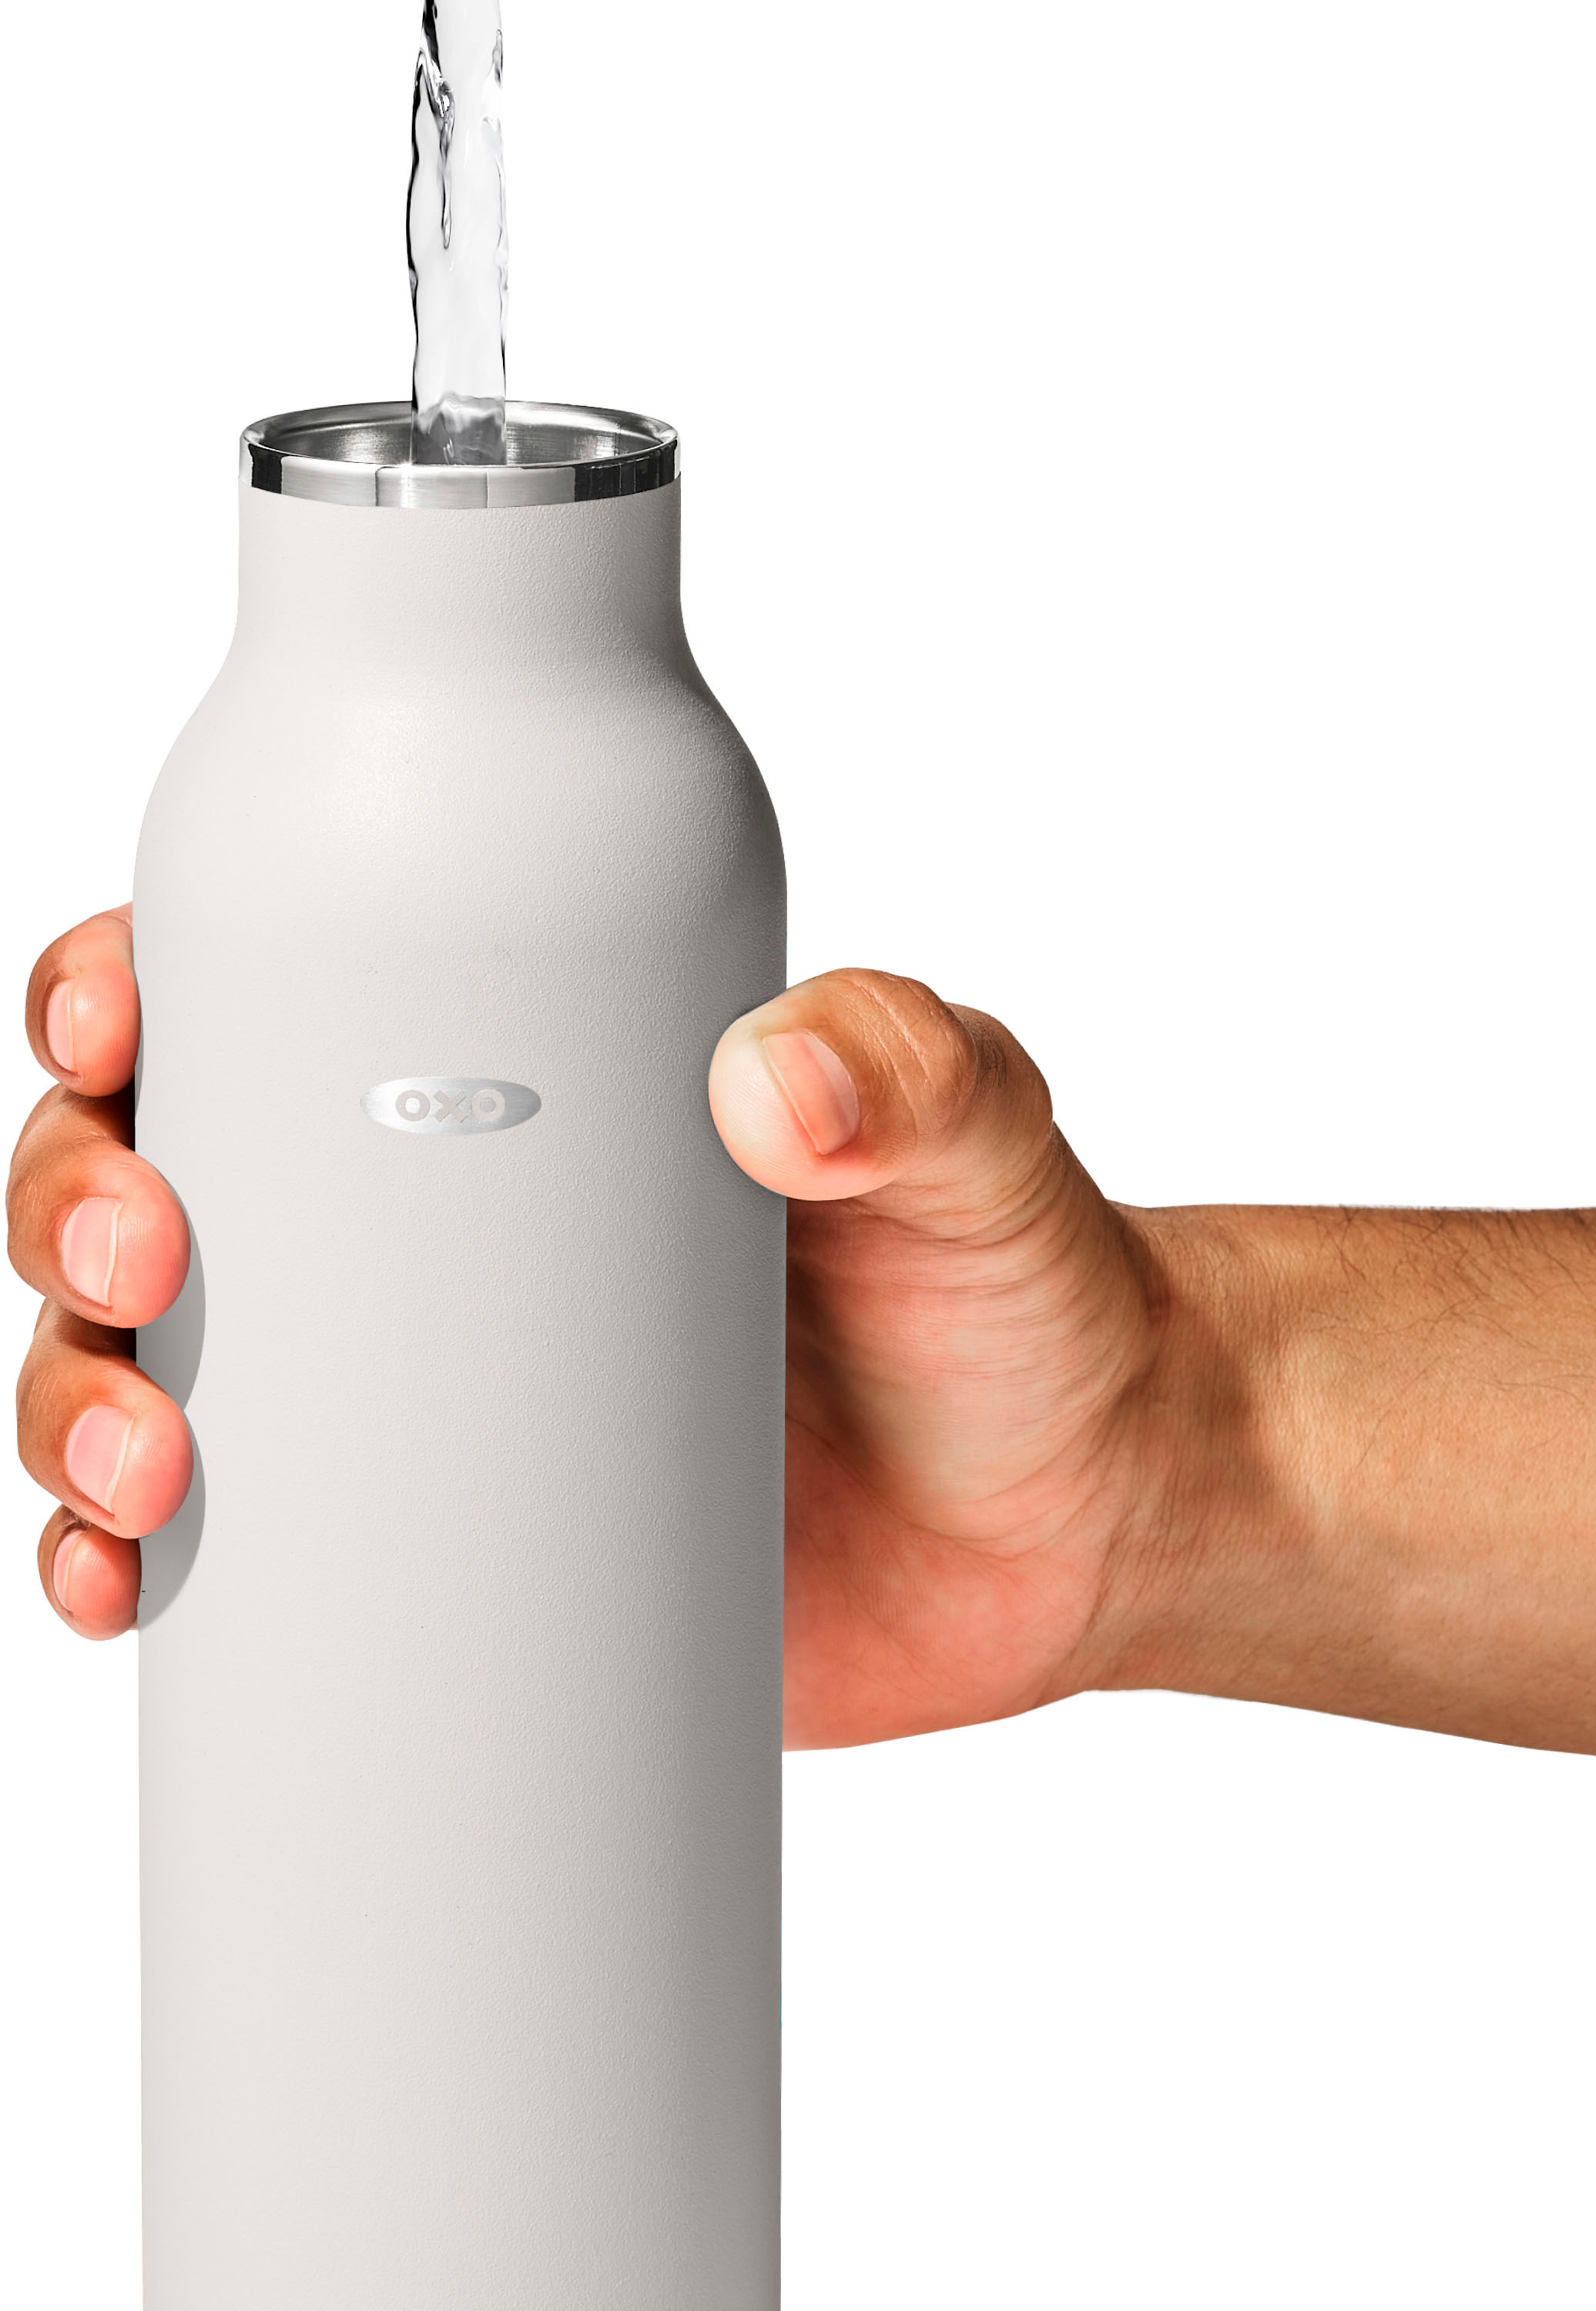 OXO - Strive Insulated Water Bottle - 24 oz - Black - Dishwasher